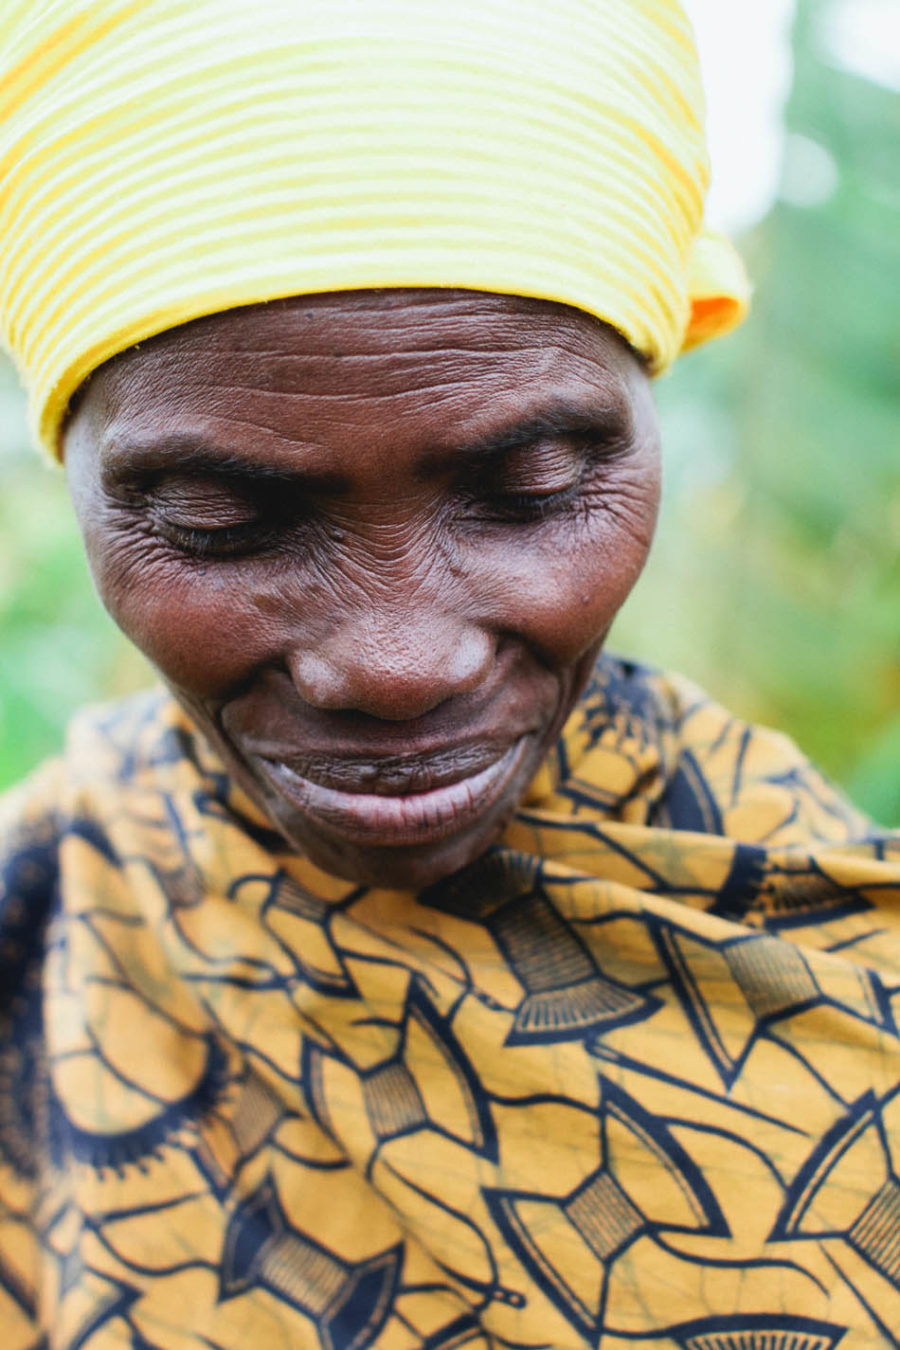 farmers in africa, farmer stories, burundi, long miles coffee project